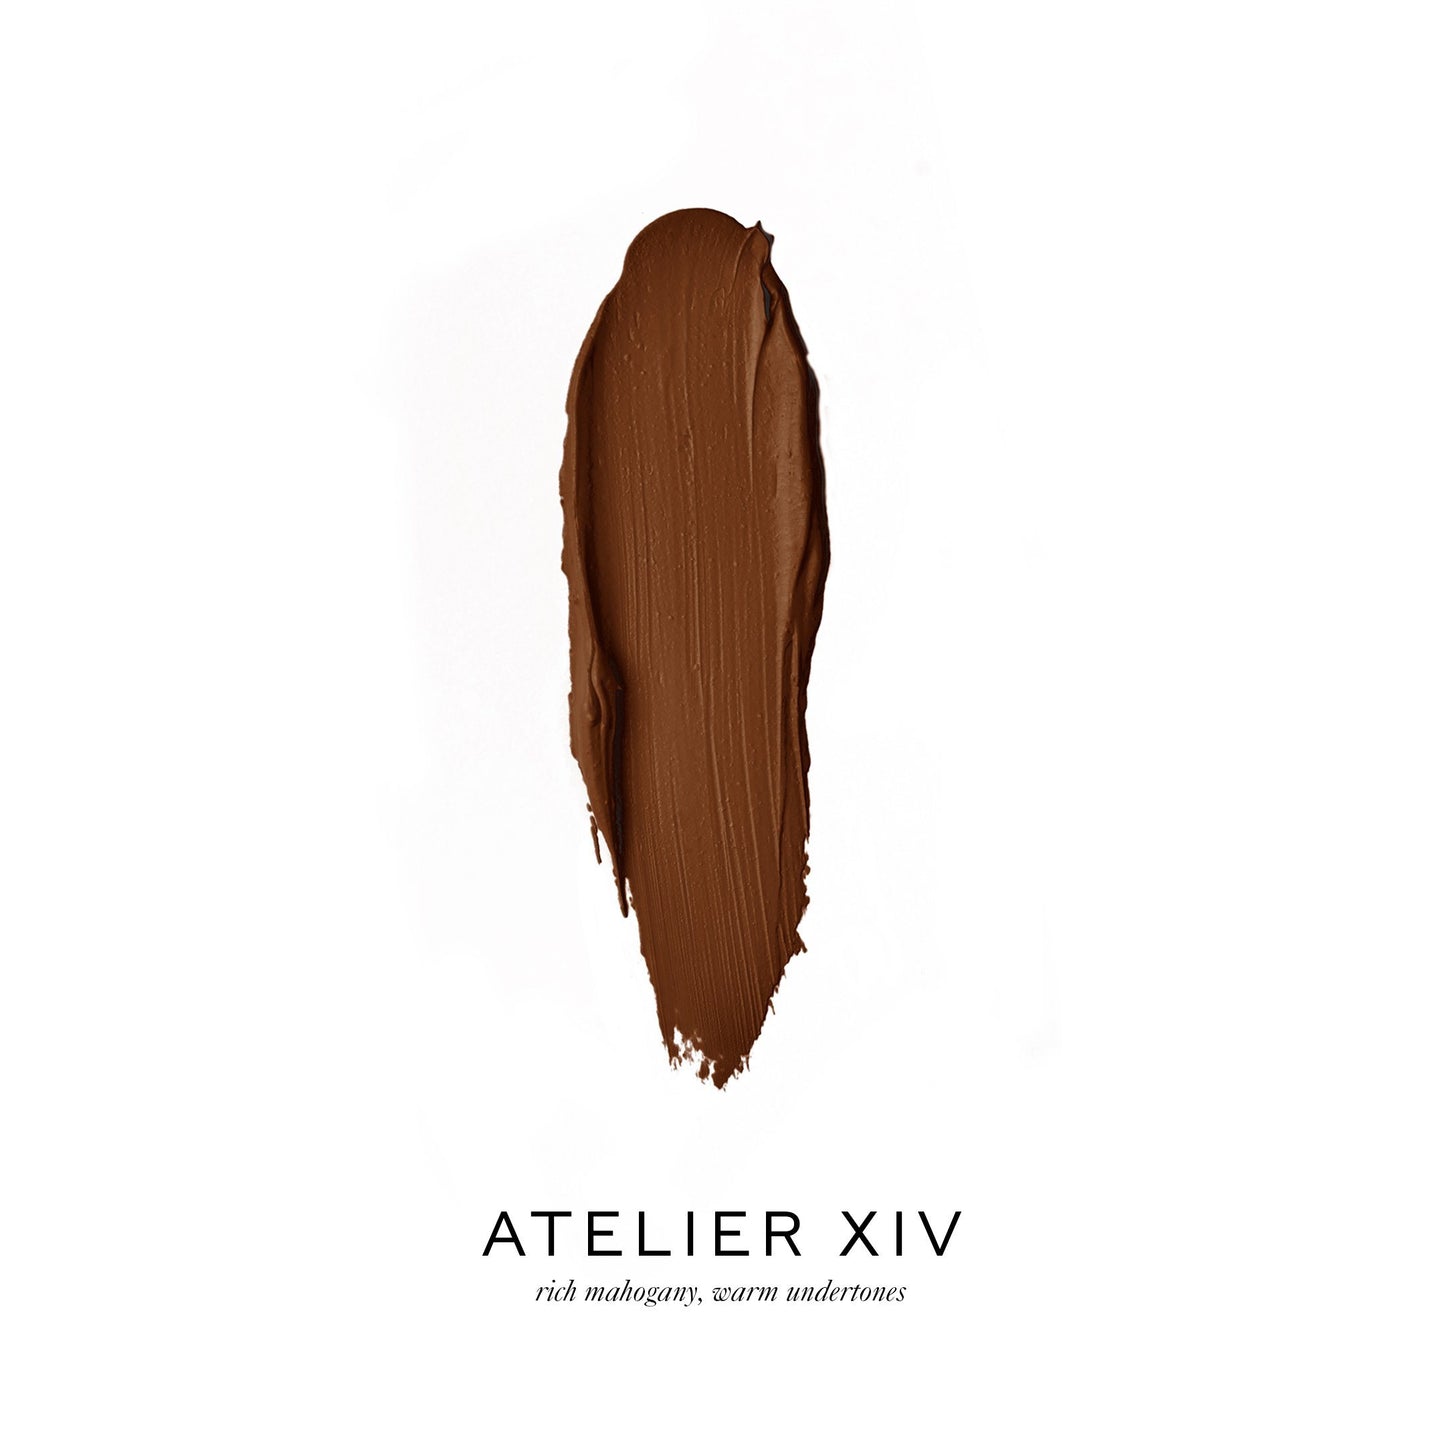 Atelier XIV (rich mahogany, warm undertone)